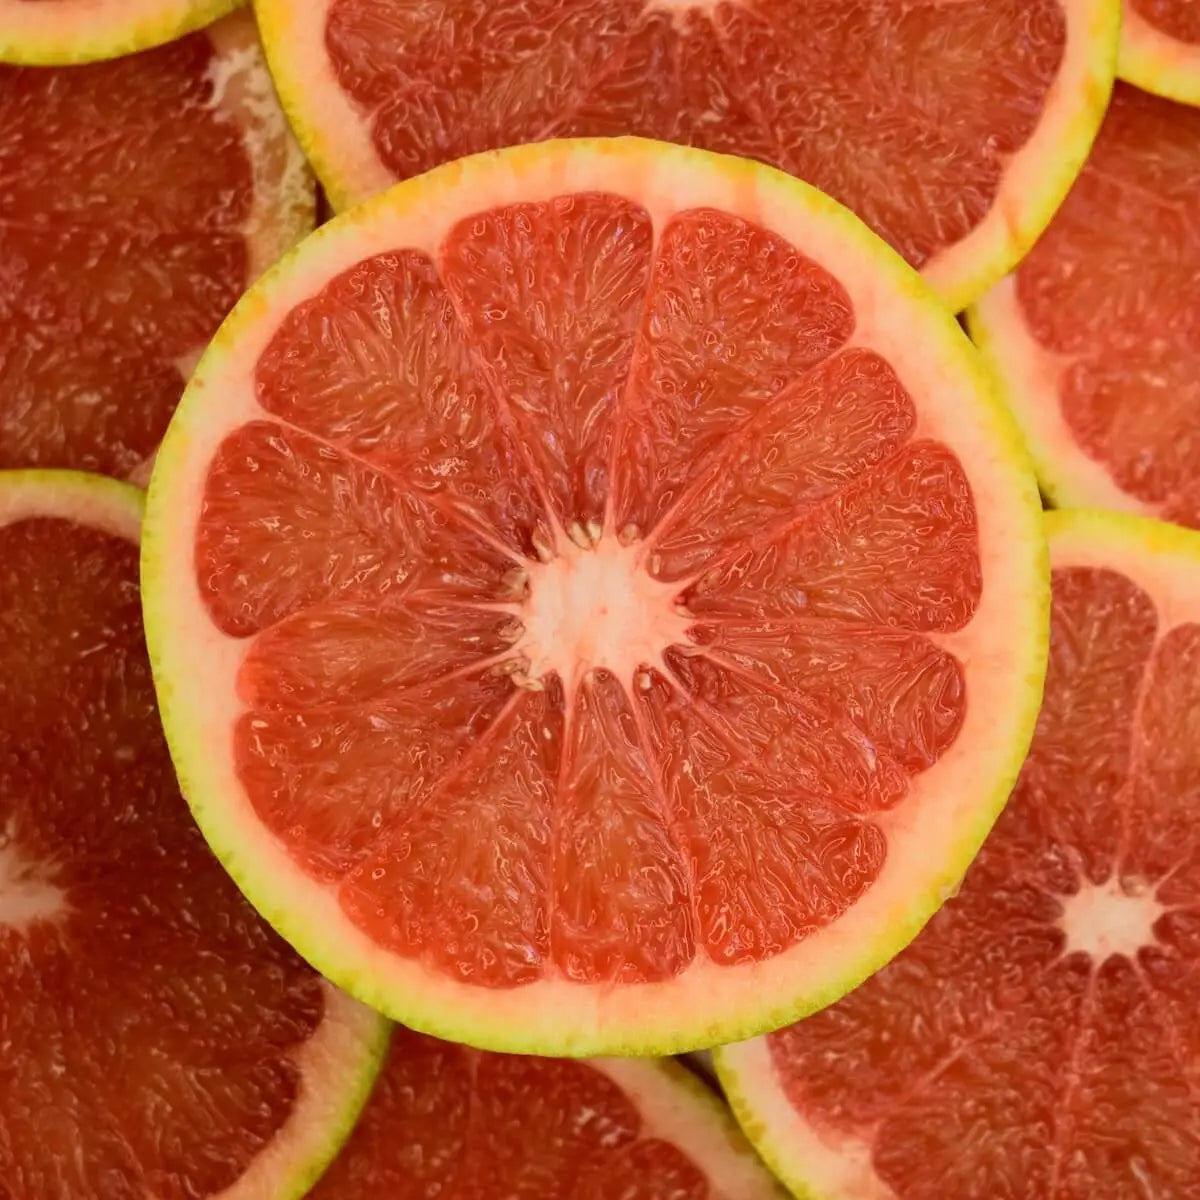 Large slices of pink grapefruit